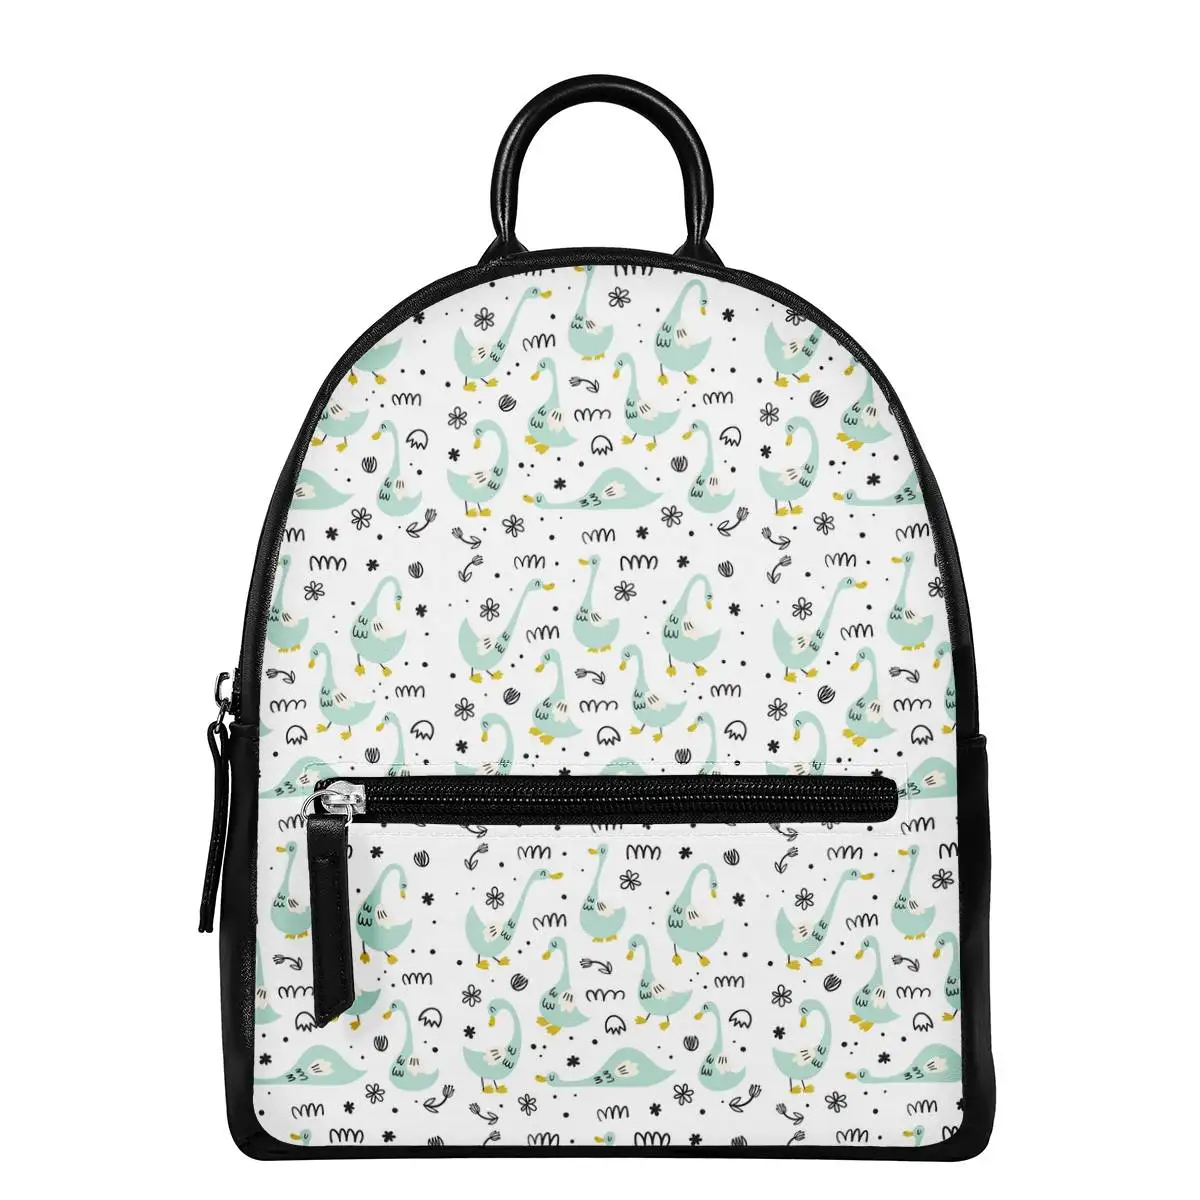 2021 New Travel Ladies Outdoor School Backpack For Childrens Cartoon Duck Printing Multi Function Bag